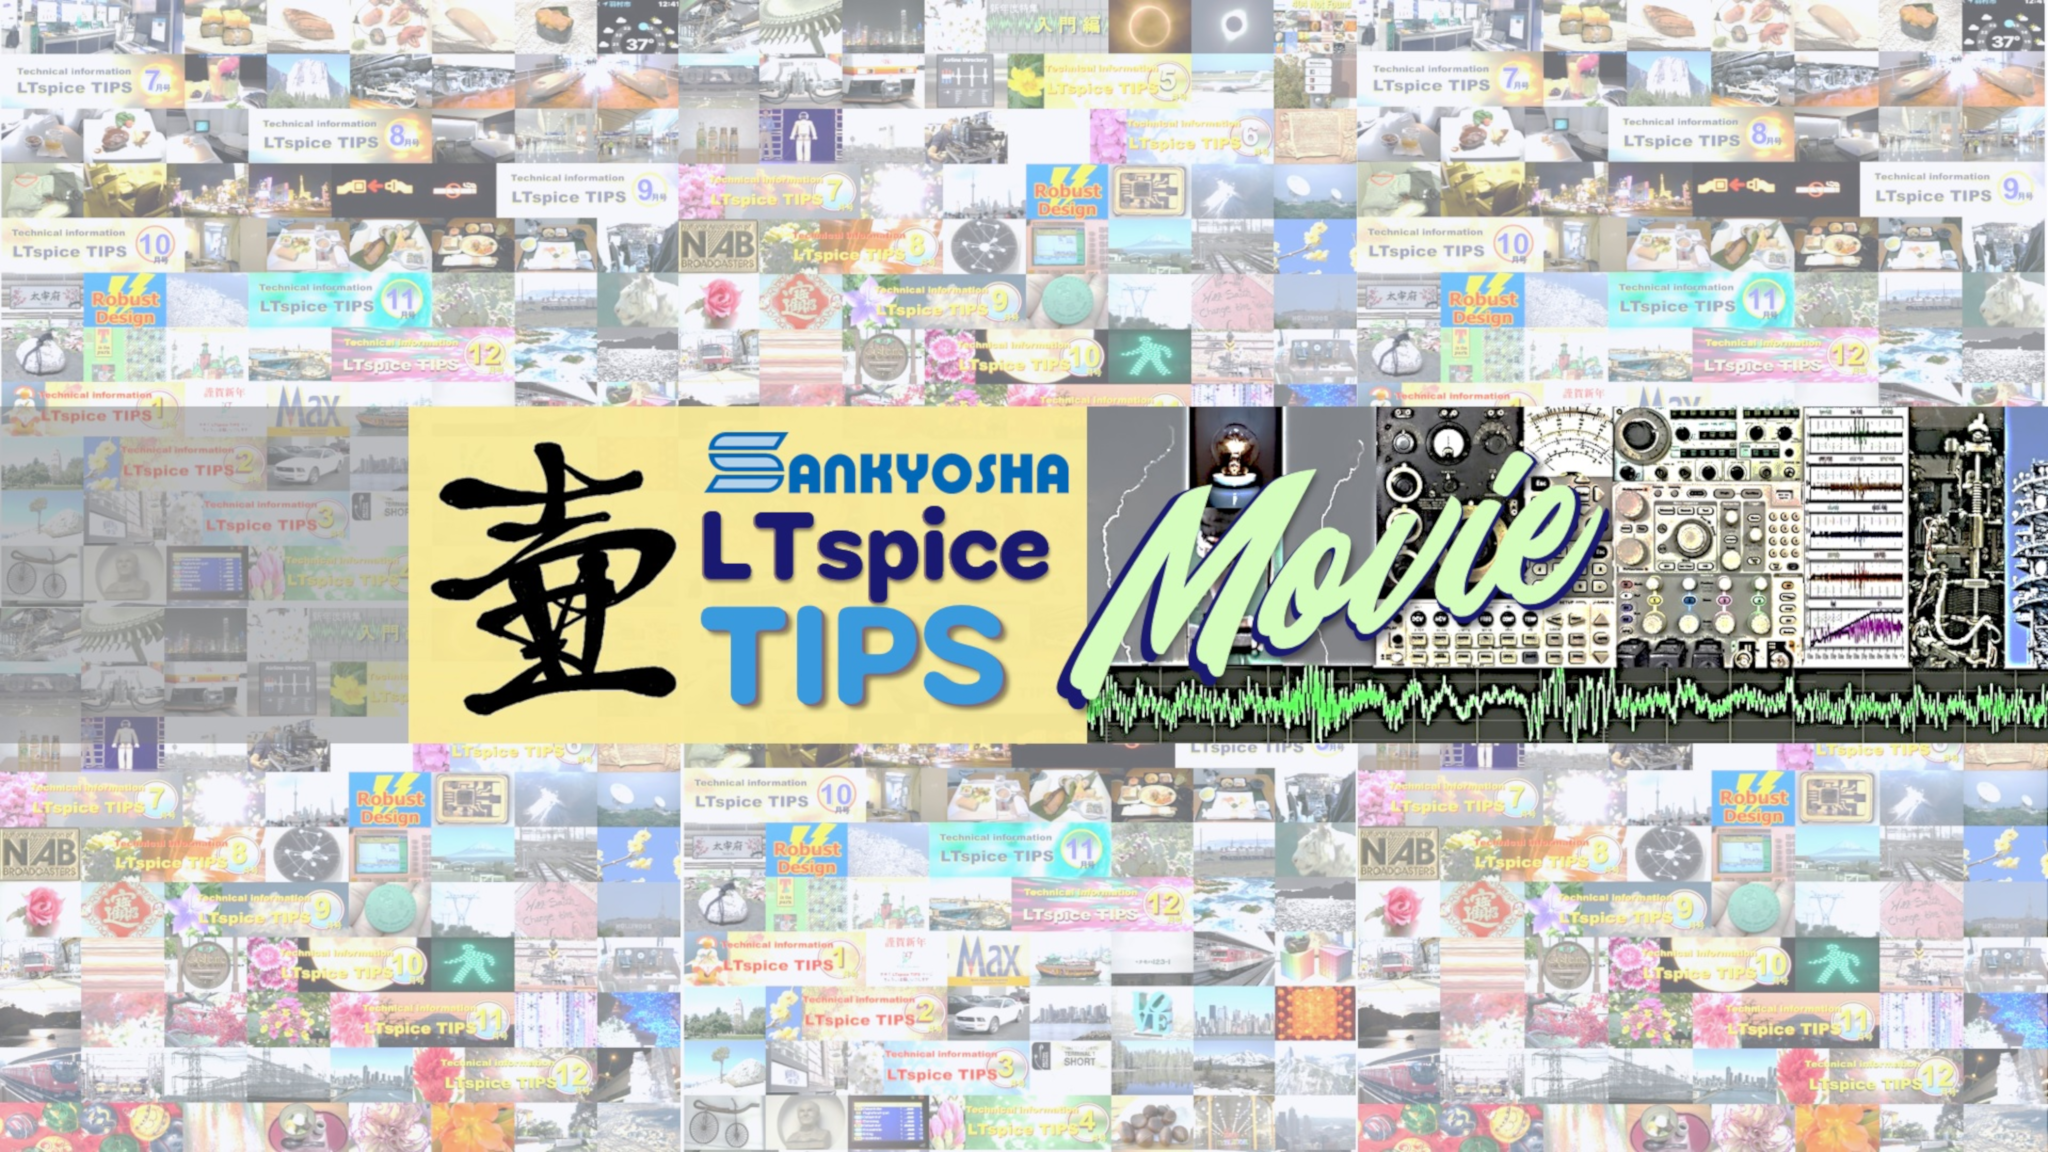 Sankyosha LTspice TIPS Movie